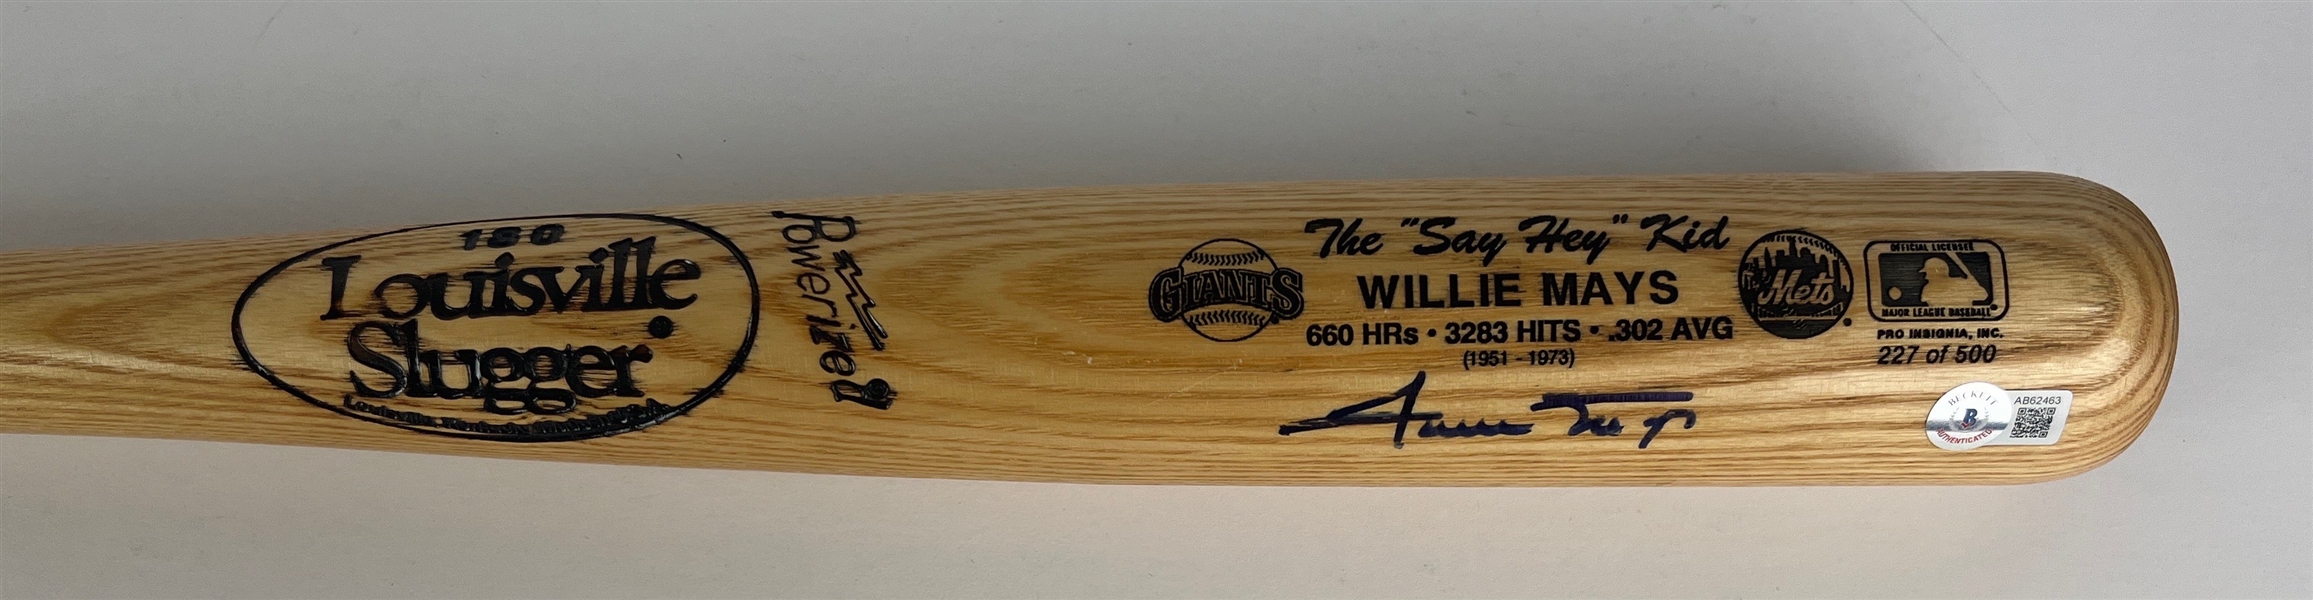 Willie Mays Signed Ltd. Ed. Louisville Stat Bat (Beckett/BAS)